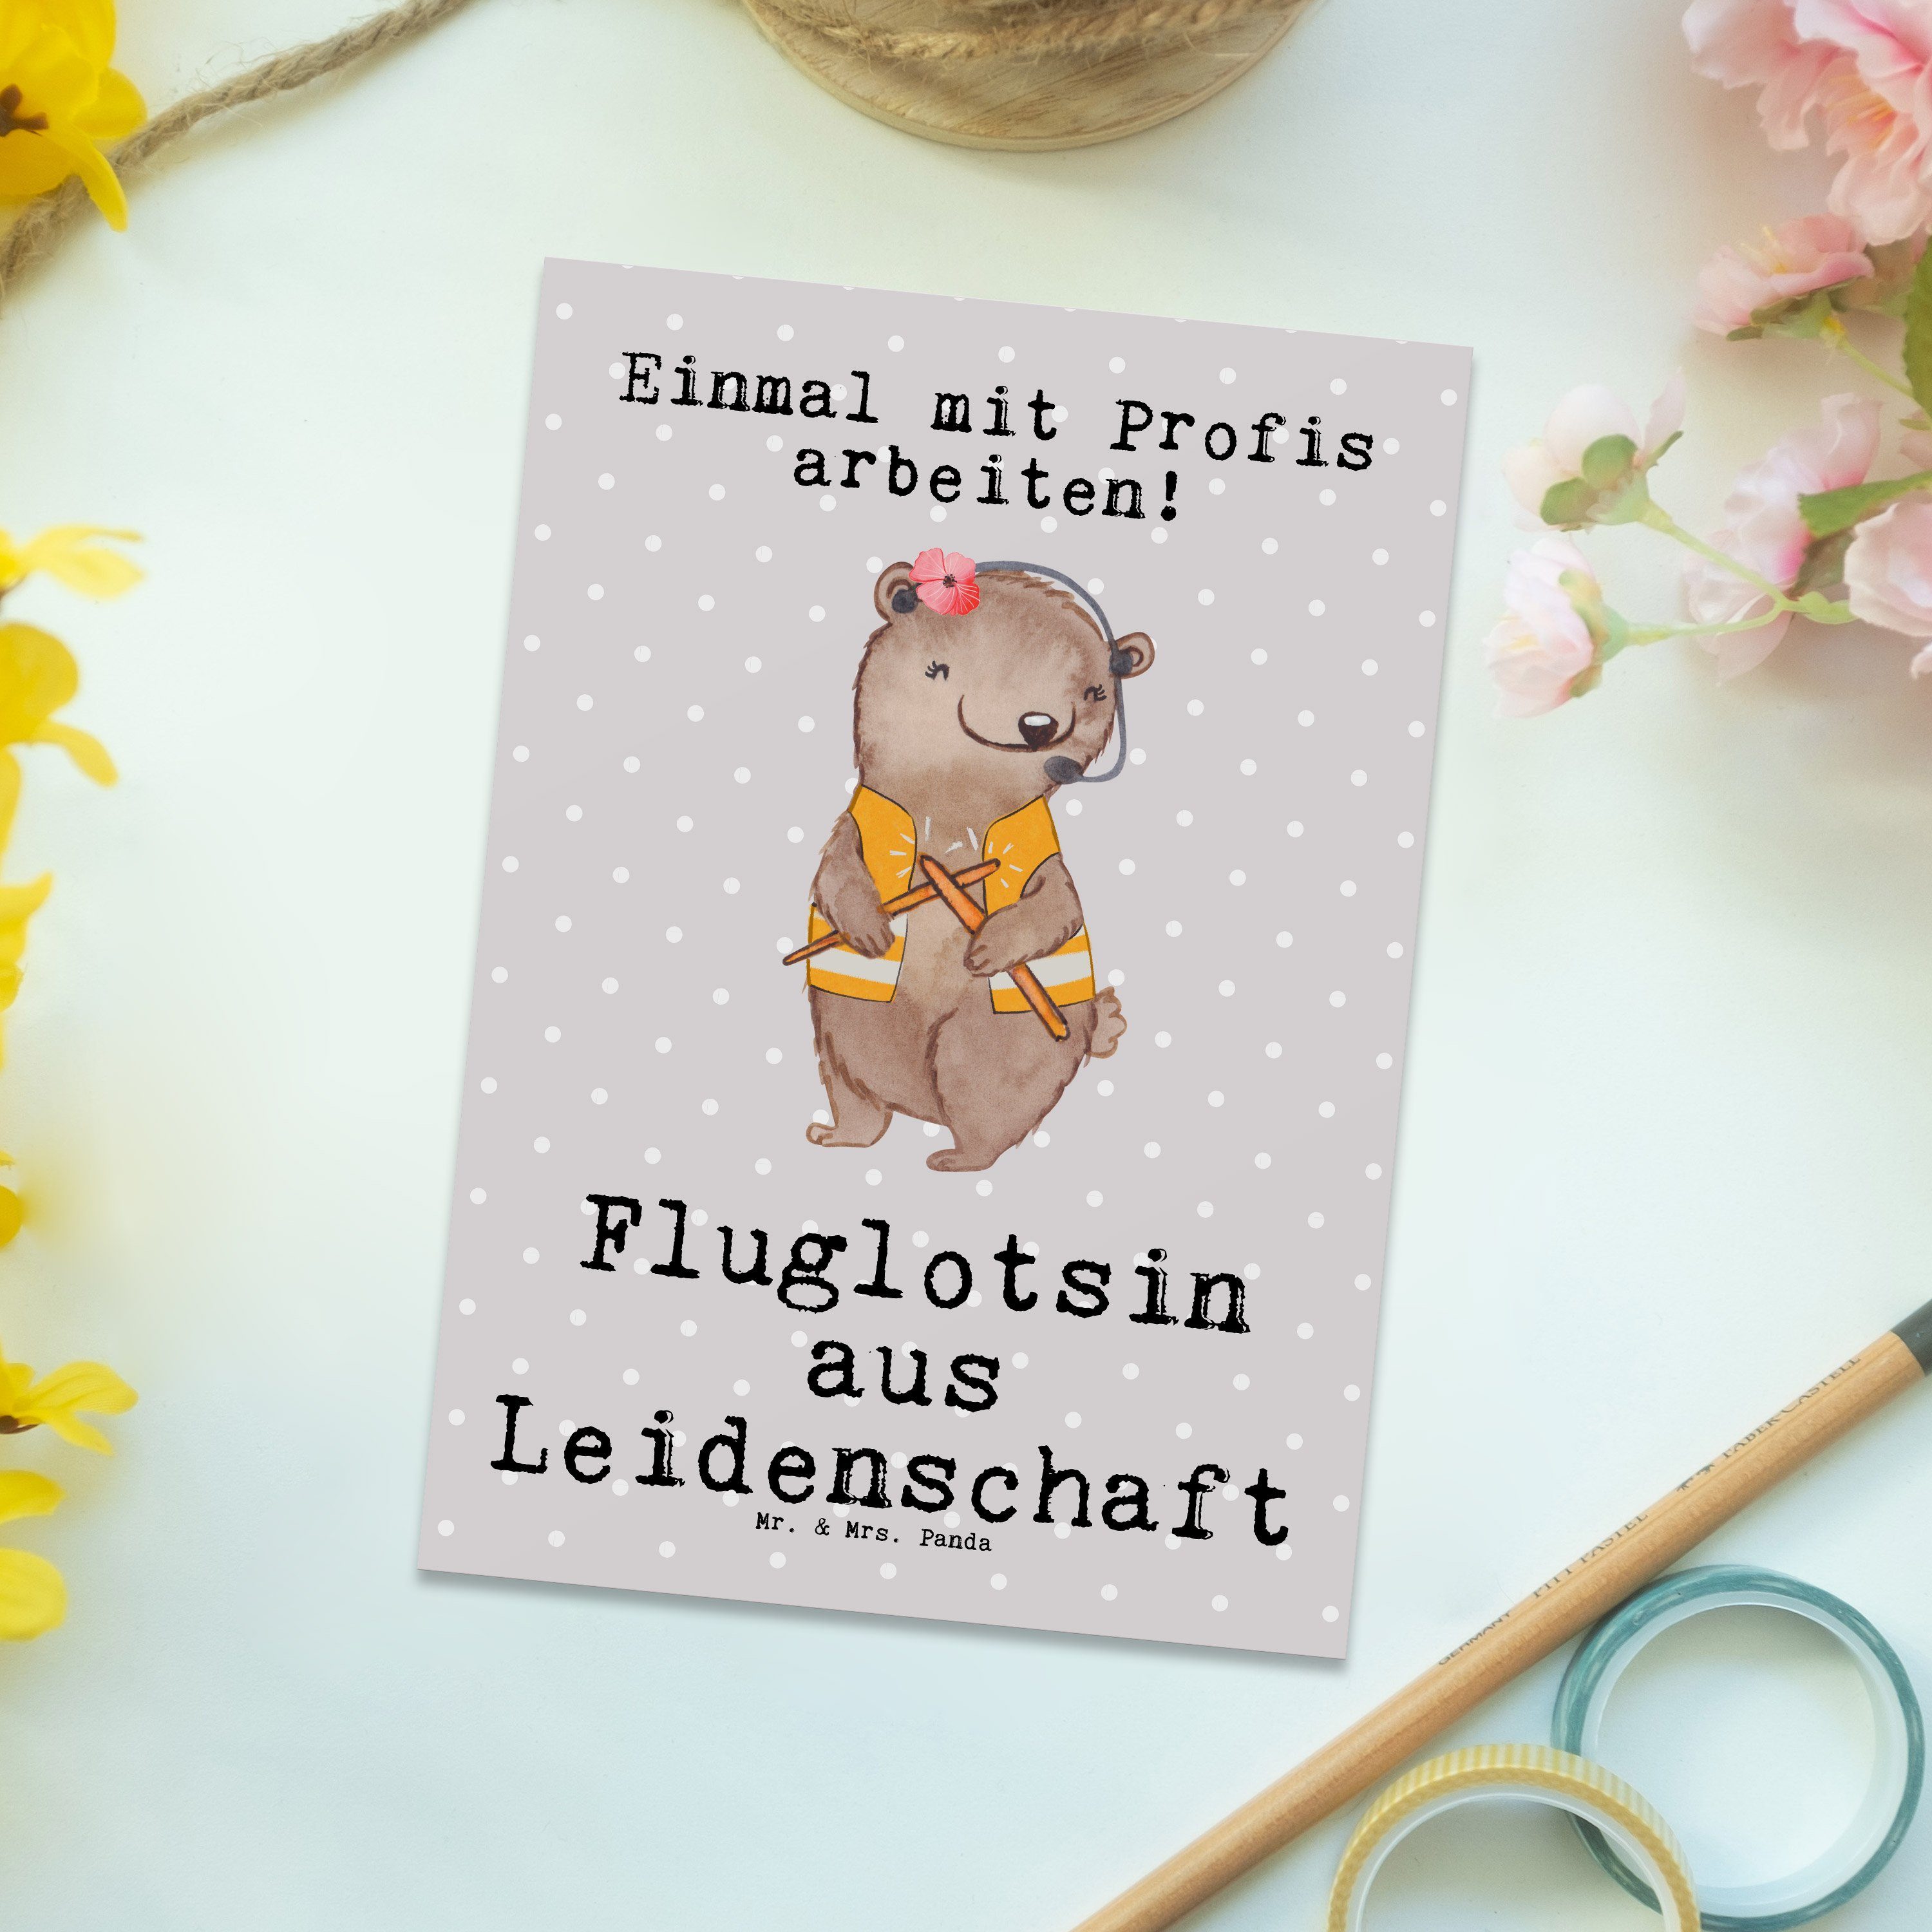 Mr. & Mrs. Panda Postkarte Fluglotsin aus Leidenschaft - Grau Pastell - Geschenk, Kollegin, Flug | Grußkarten